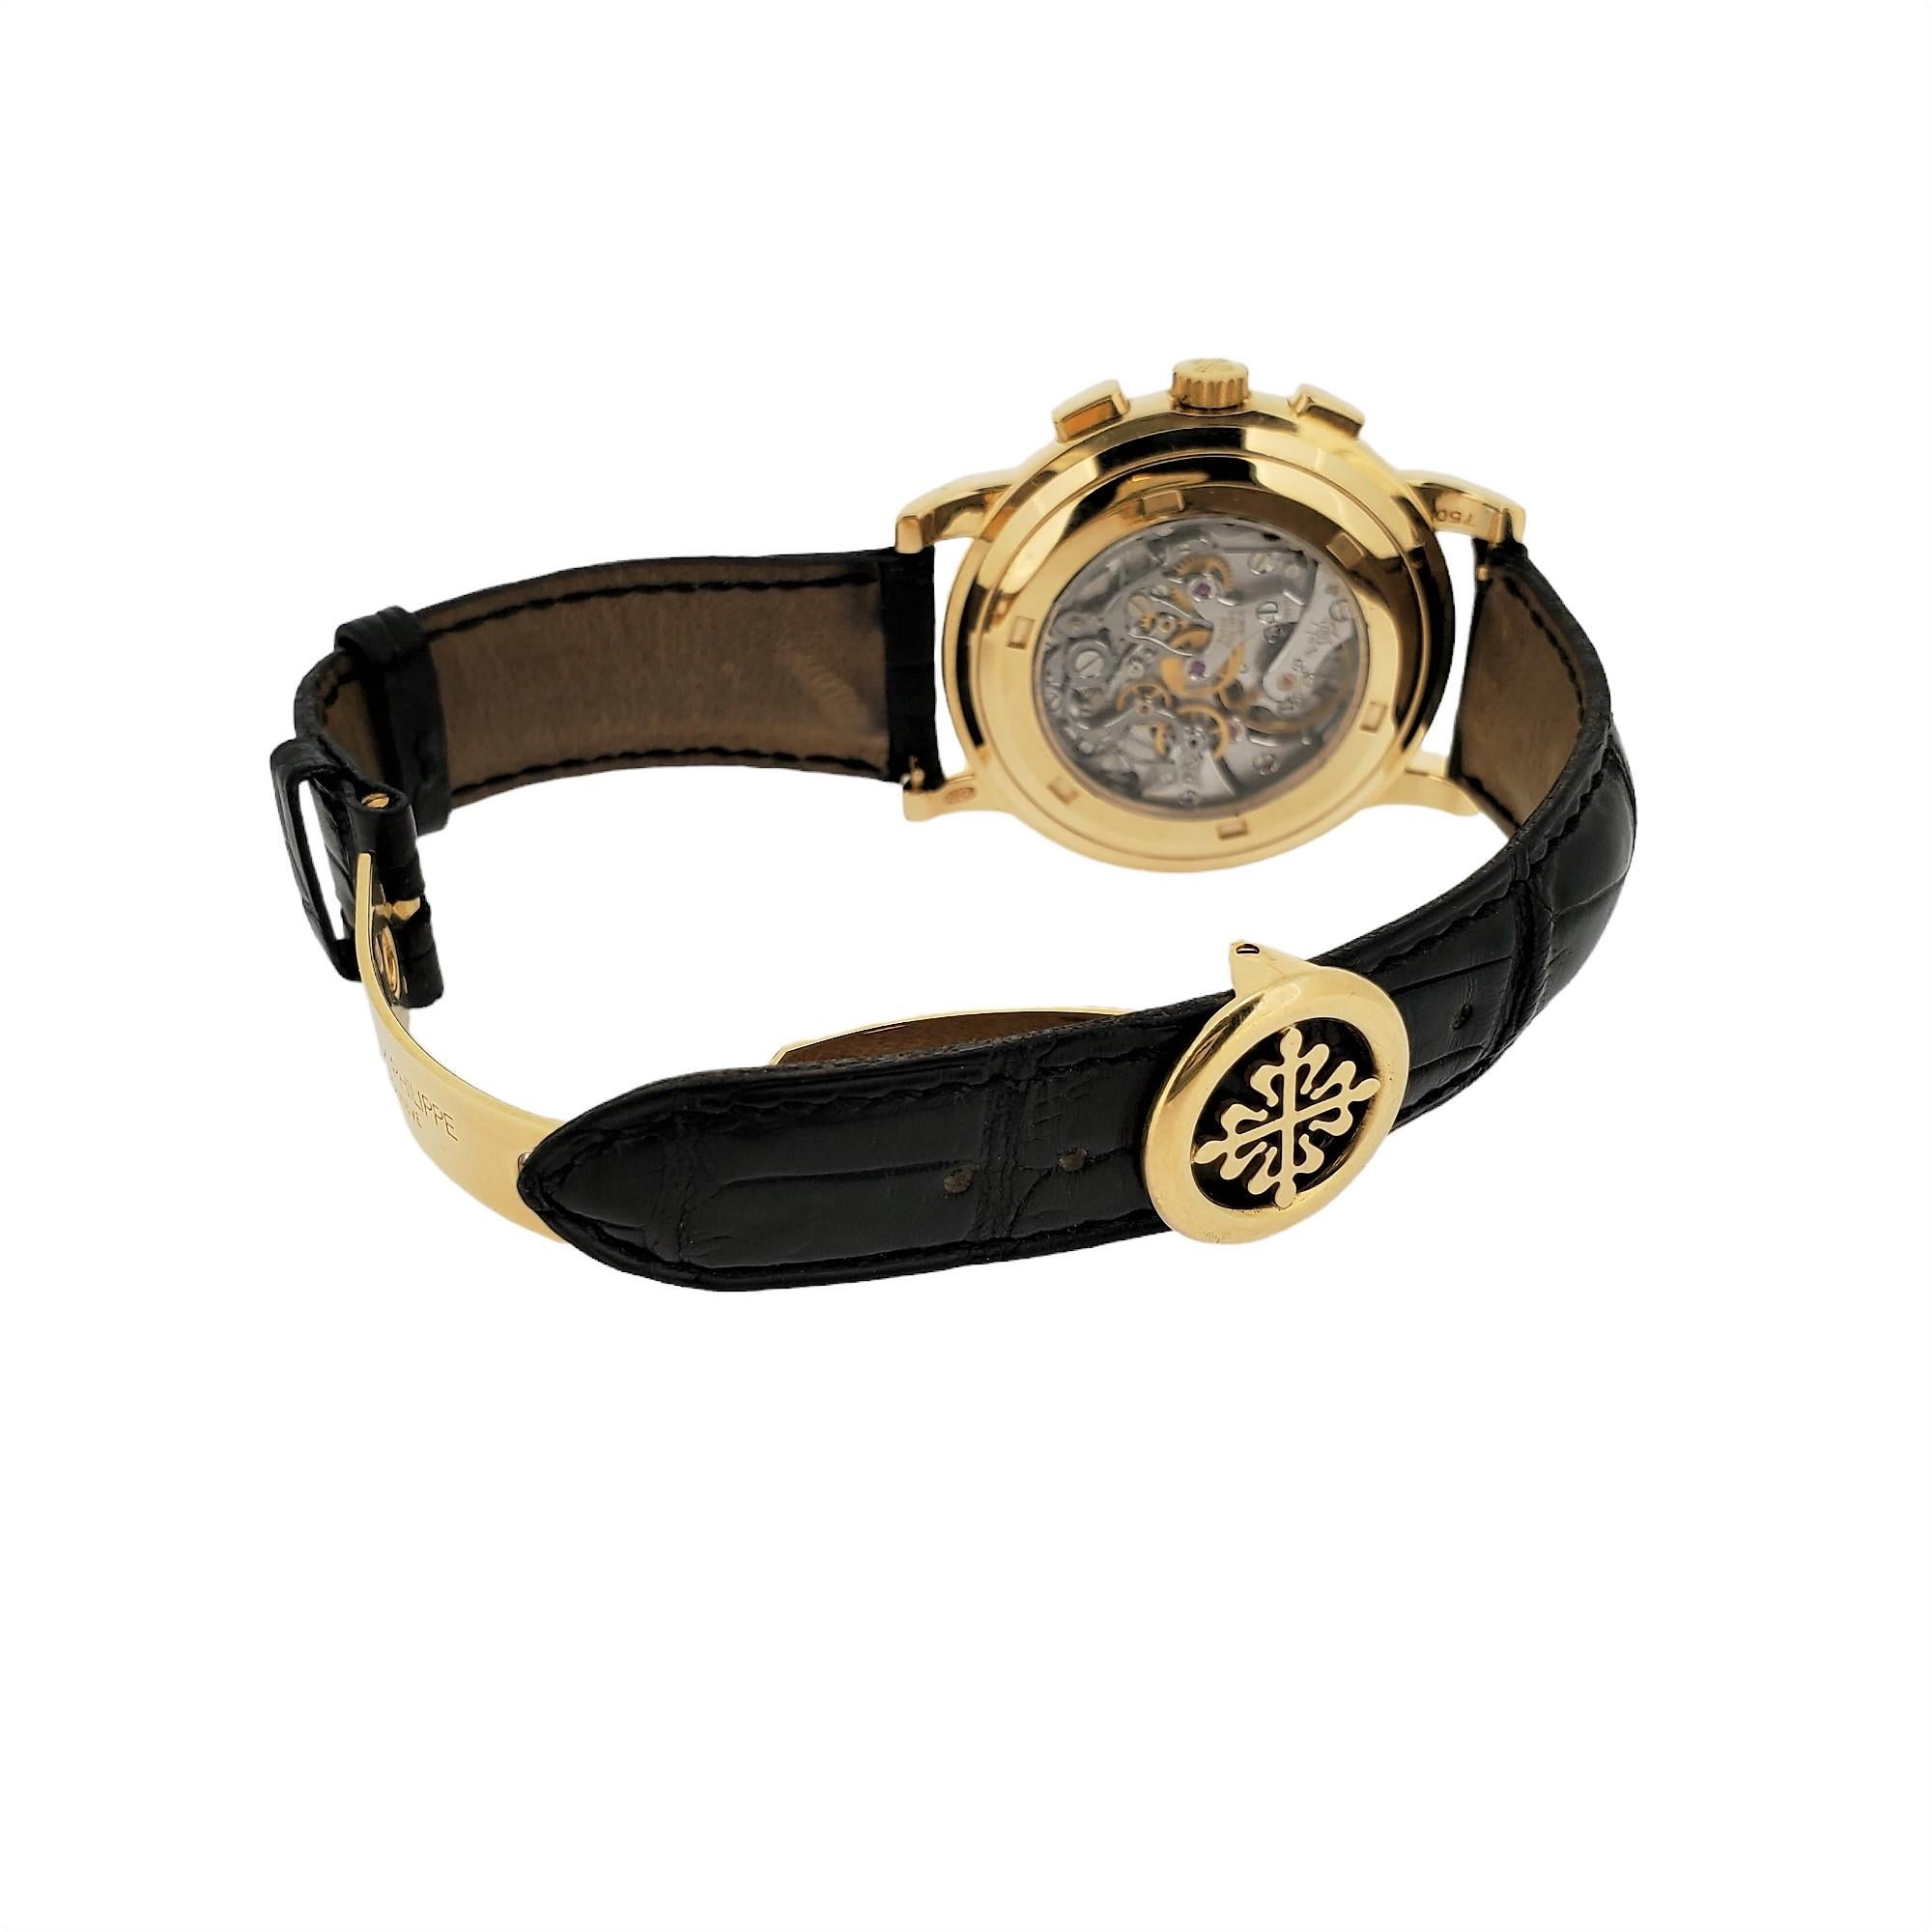 Modern Patek Philippe 5070J Chronograph Watch Yellow gold 42 mm Case Circa 2000 For Sale